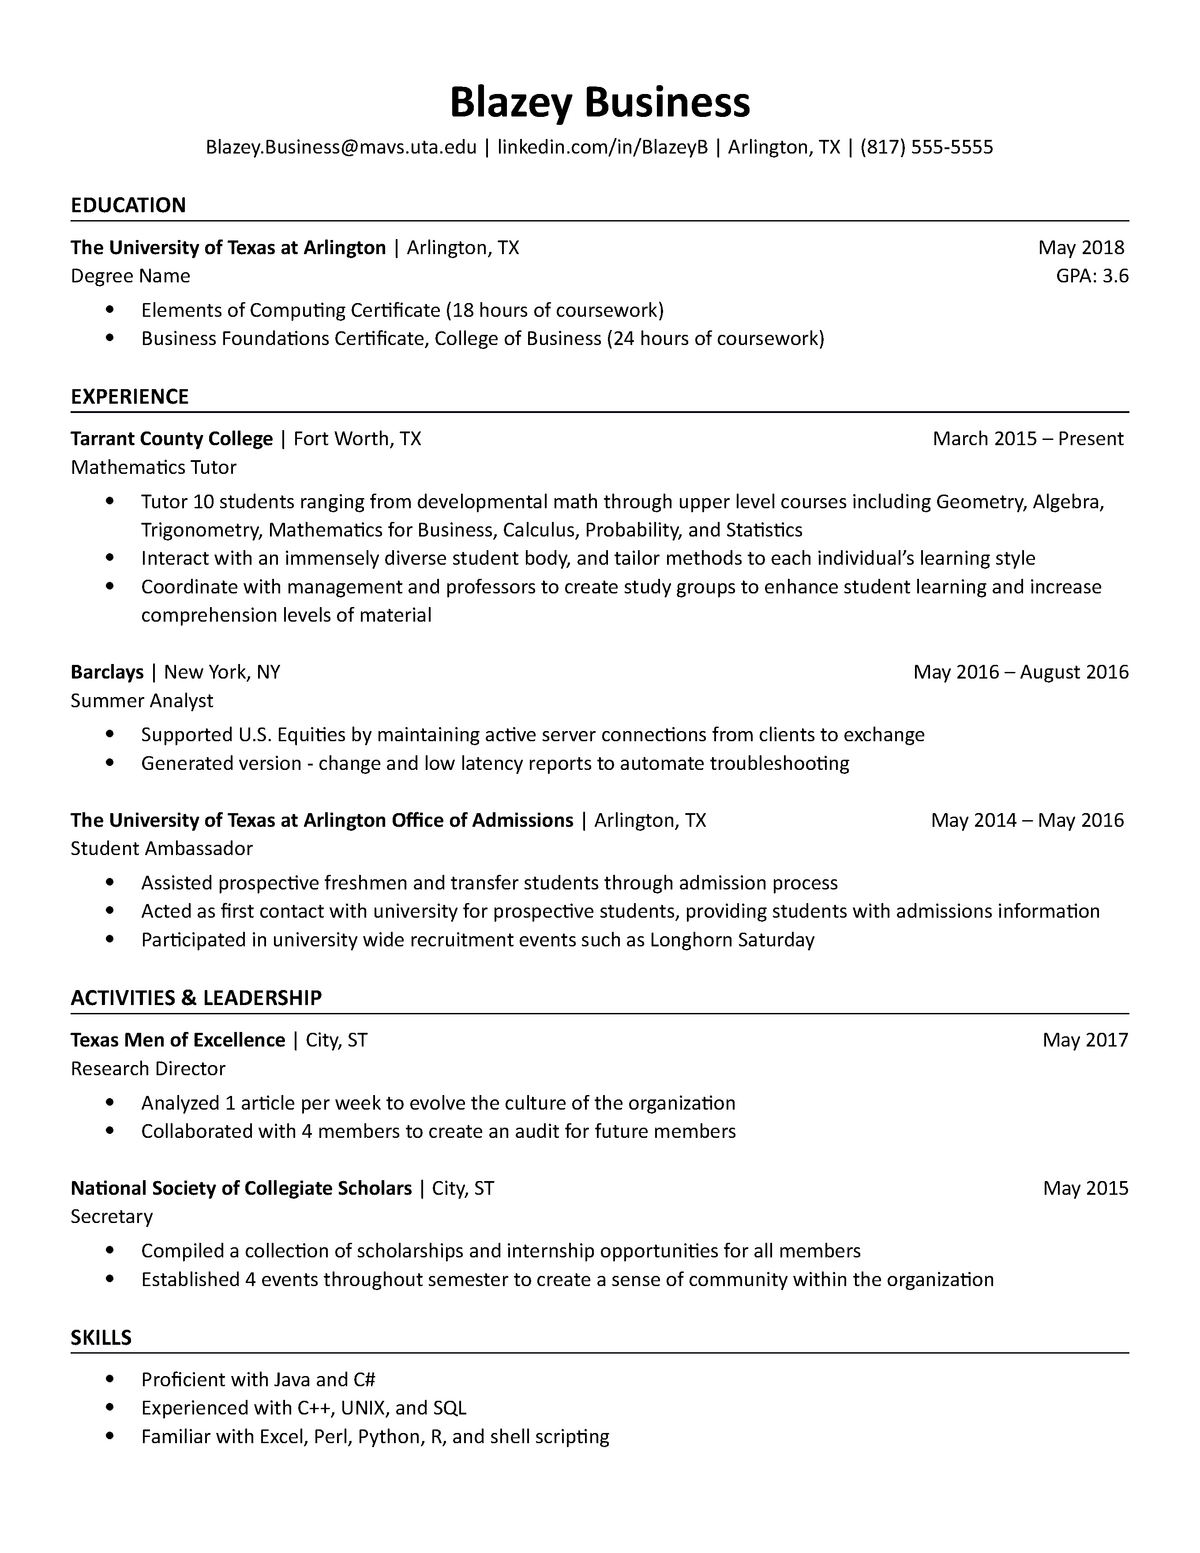 ut-arlington-resume-template-blazey-business-blazey-mavs-uta